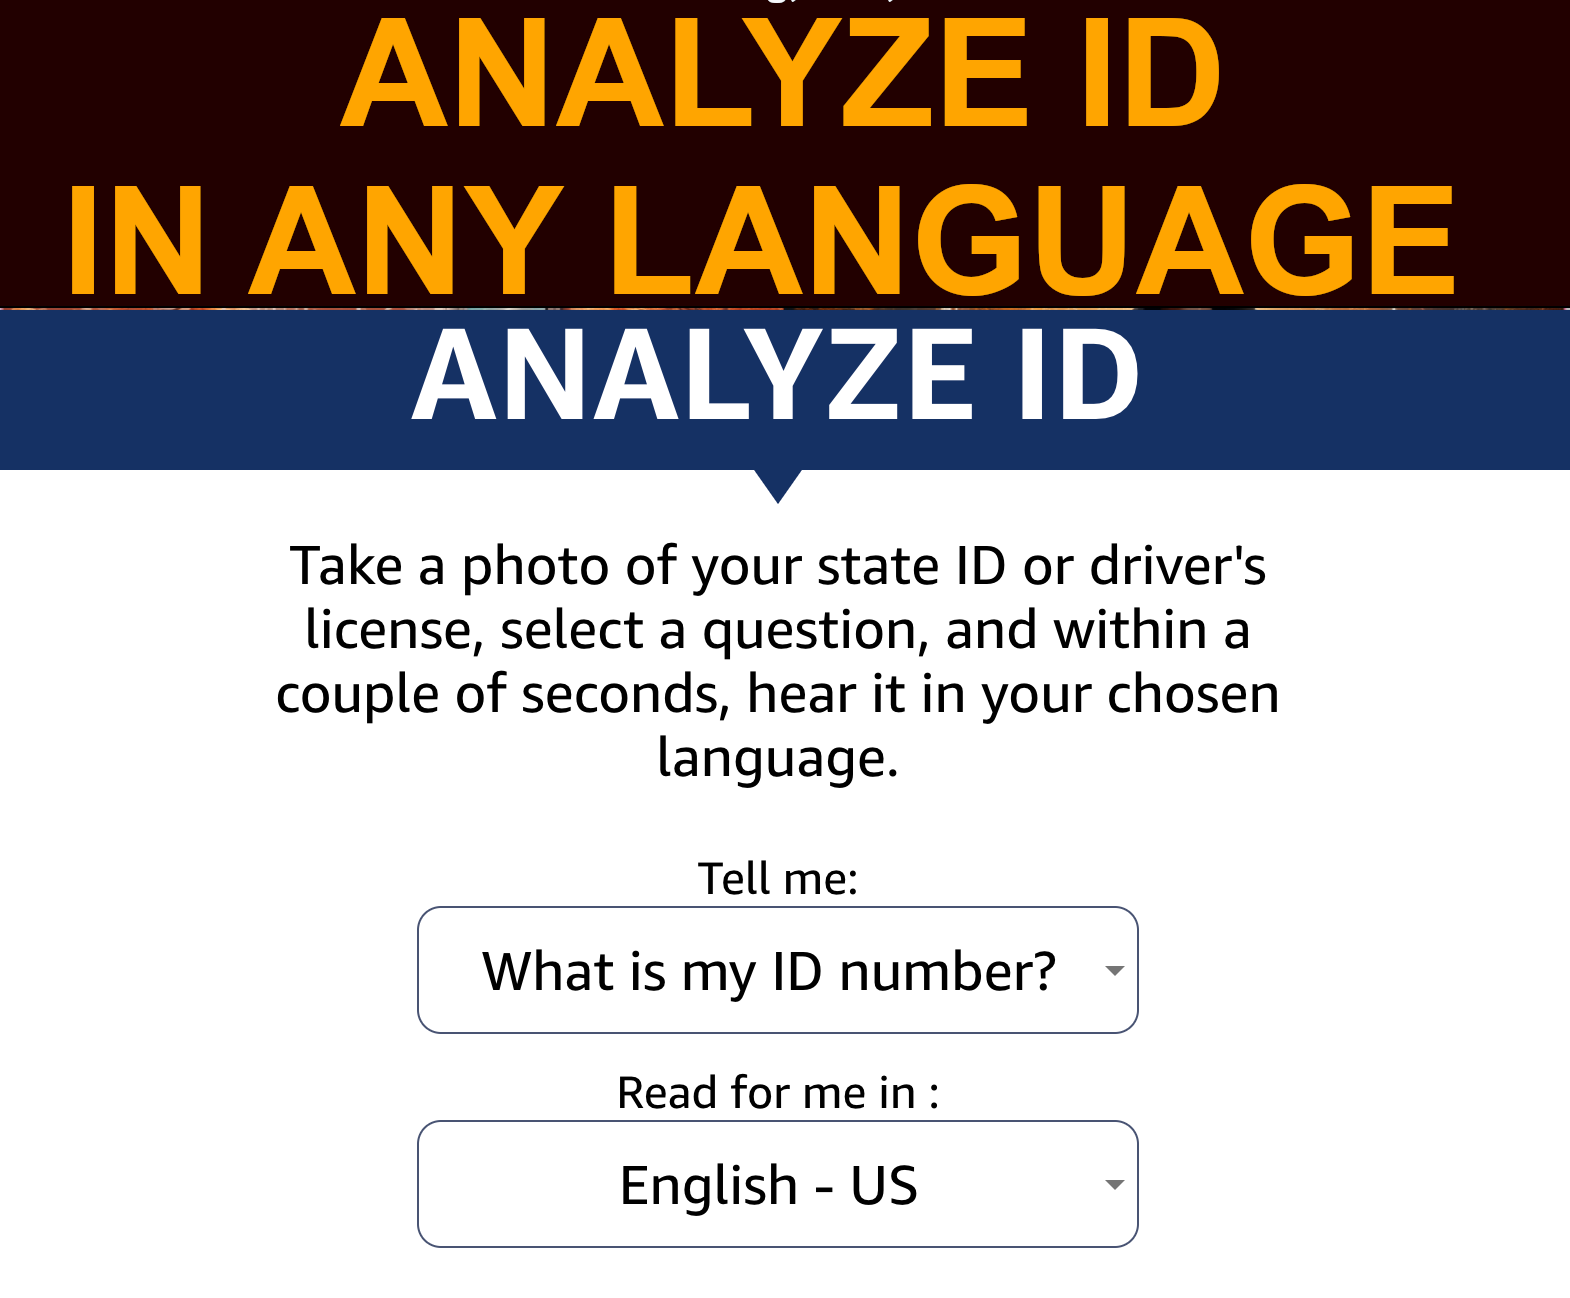 Analyze IDs in any language